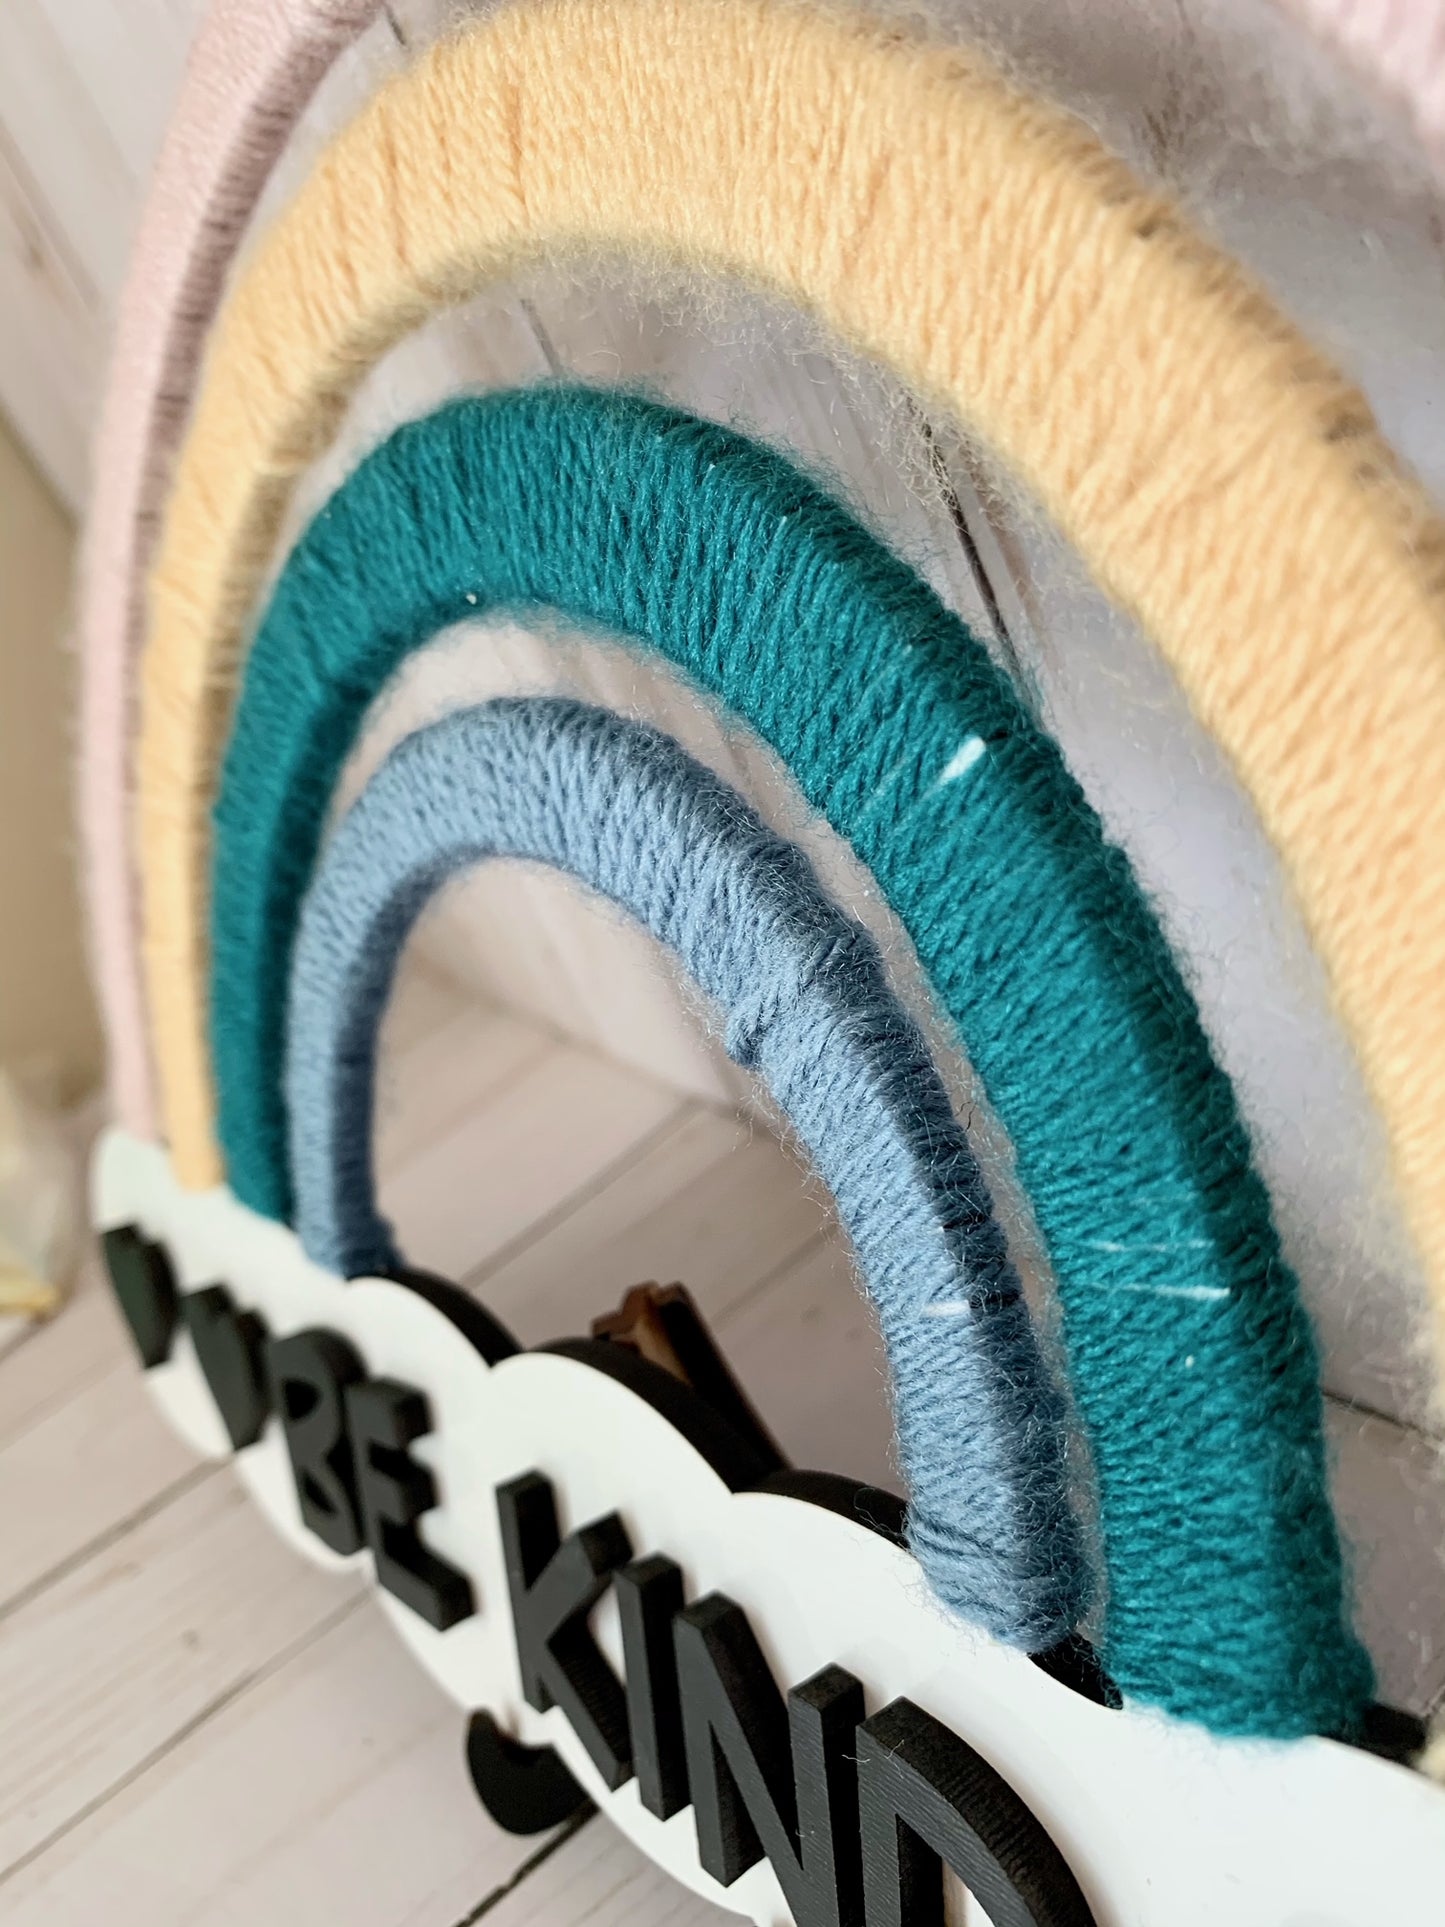 DIY Be Kind Rainbow with yarn Kit